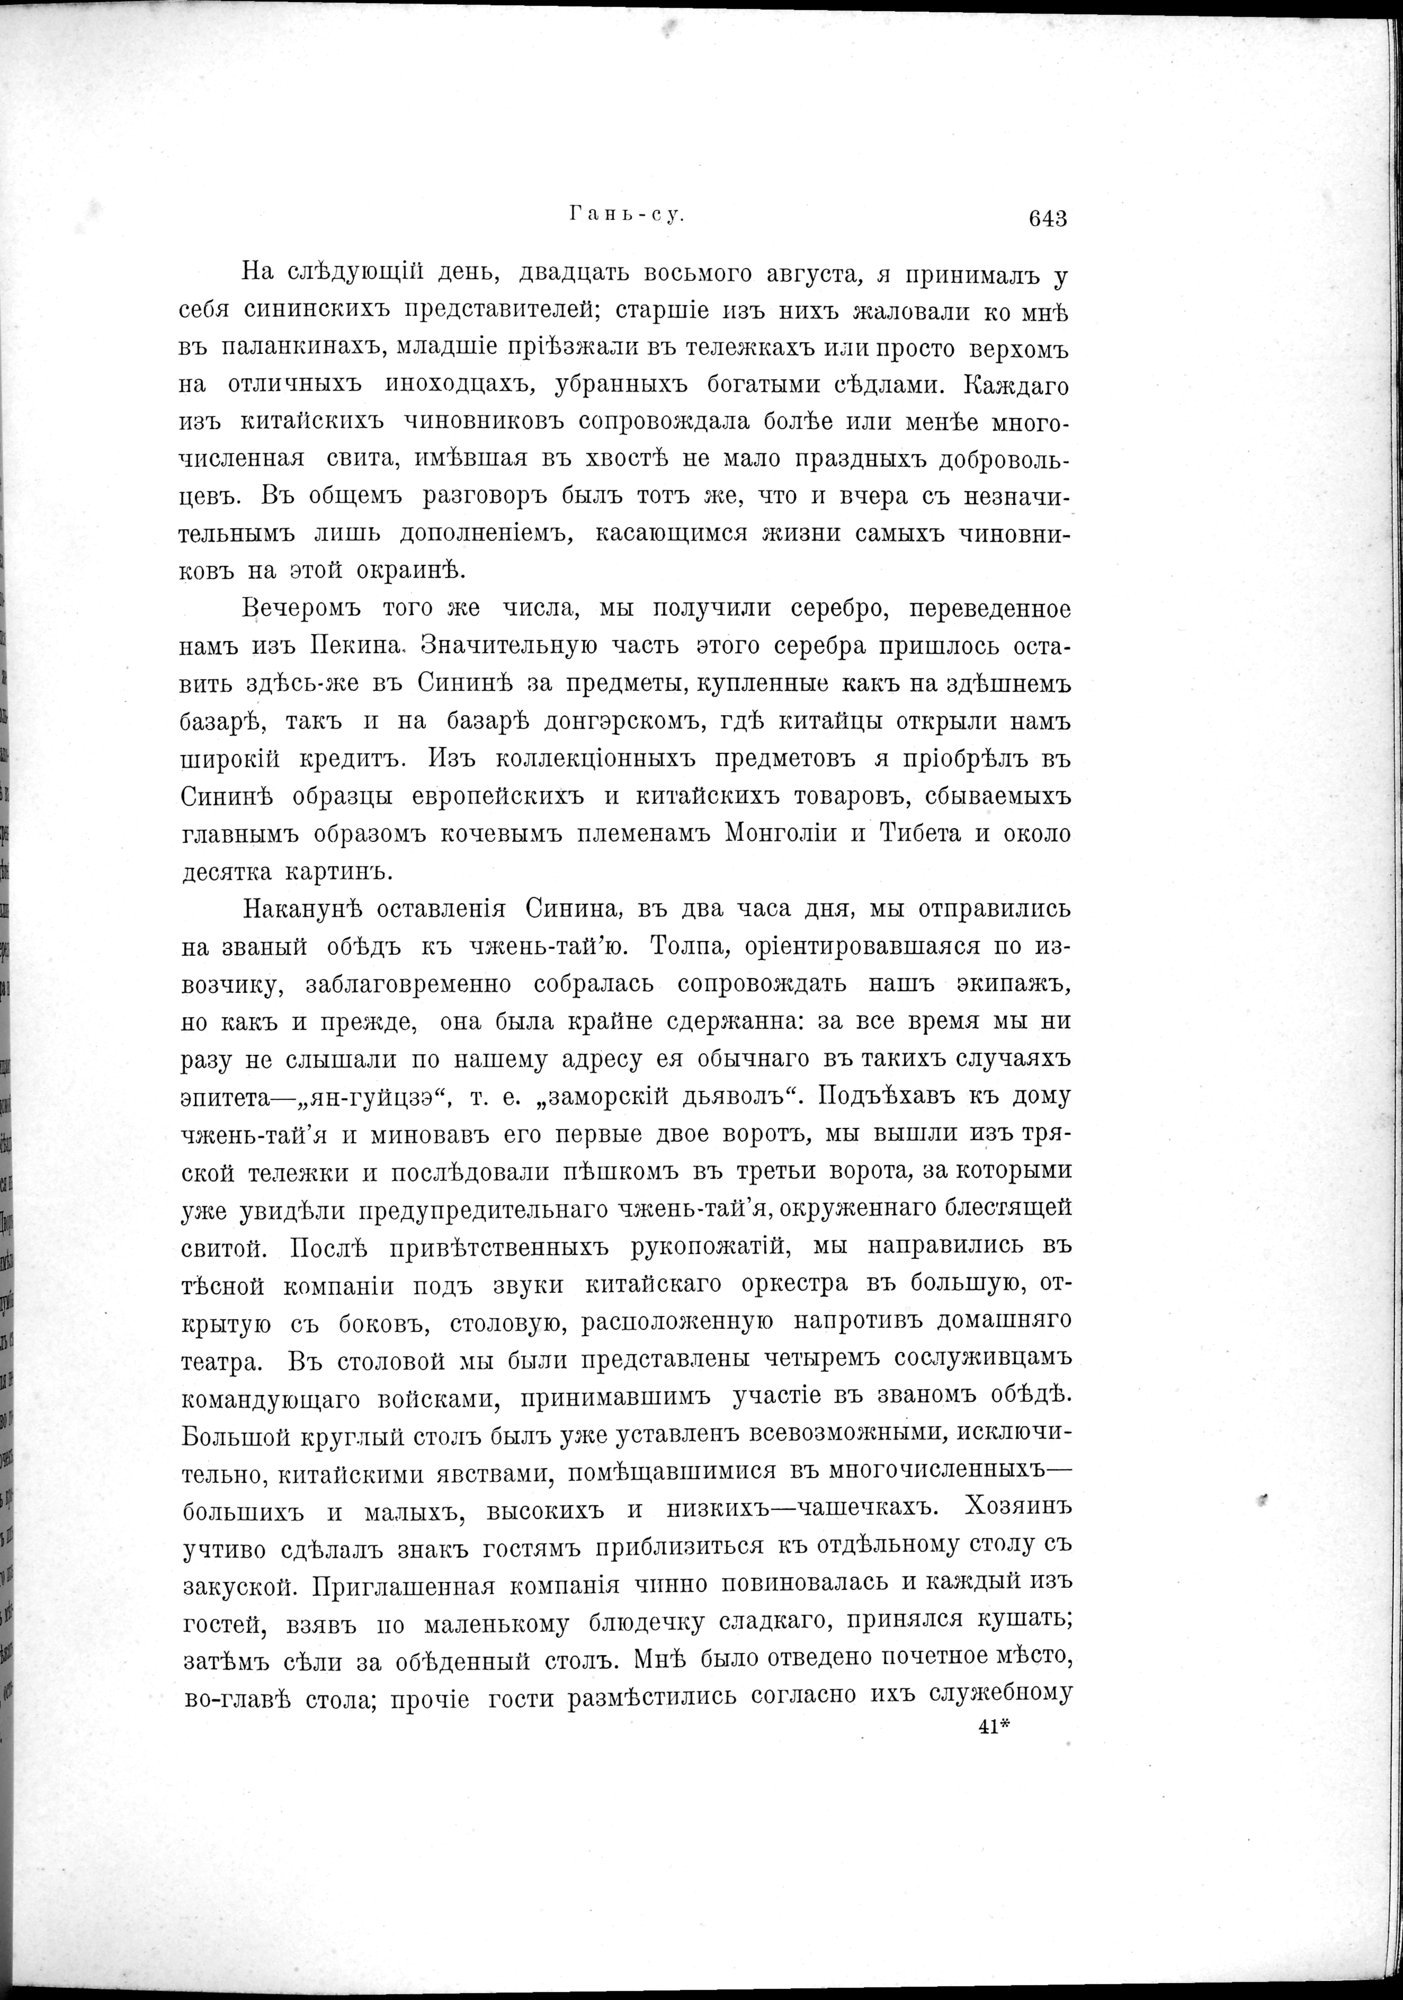 Mongoliia i Kam : vol.2 / Page 473 (Grayscale High Resolution Image)